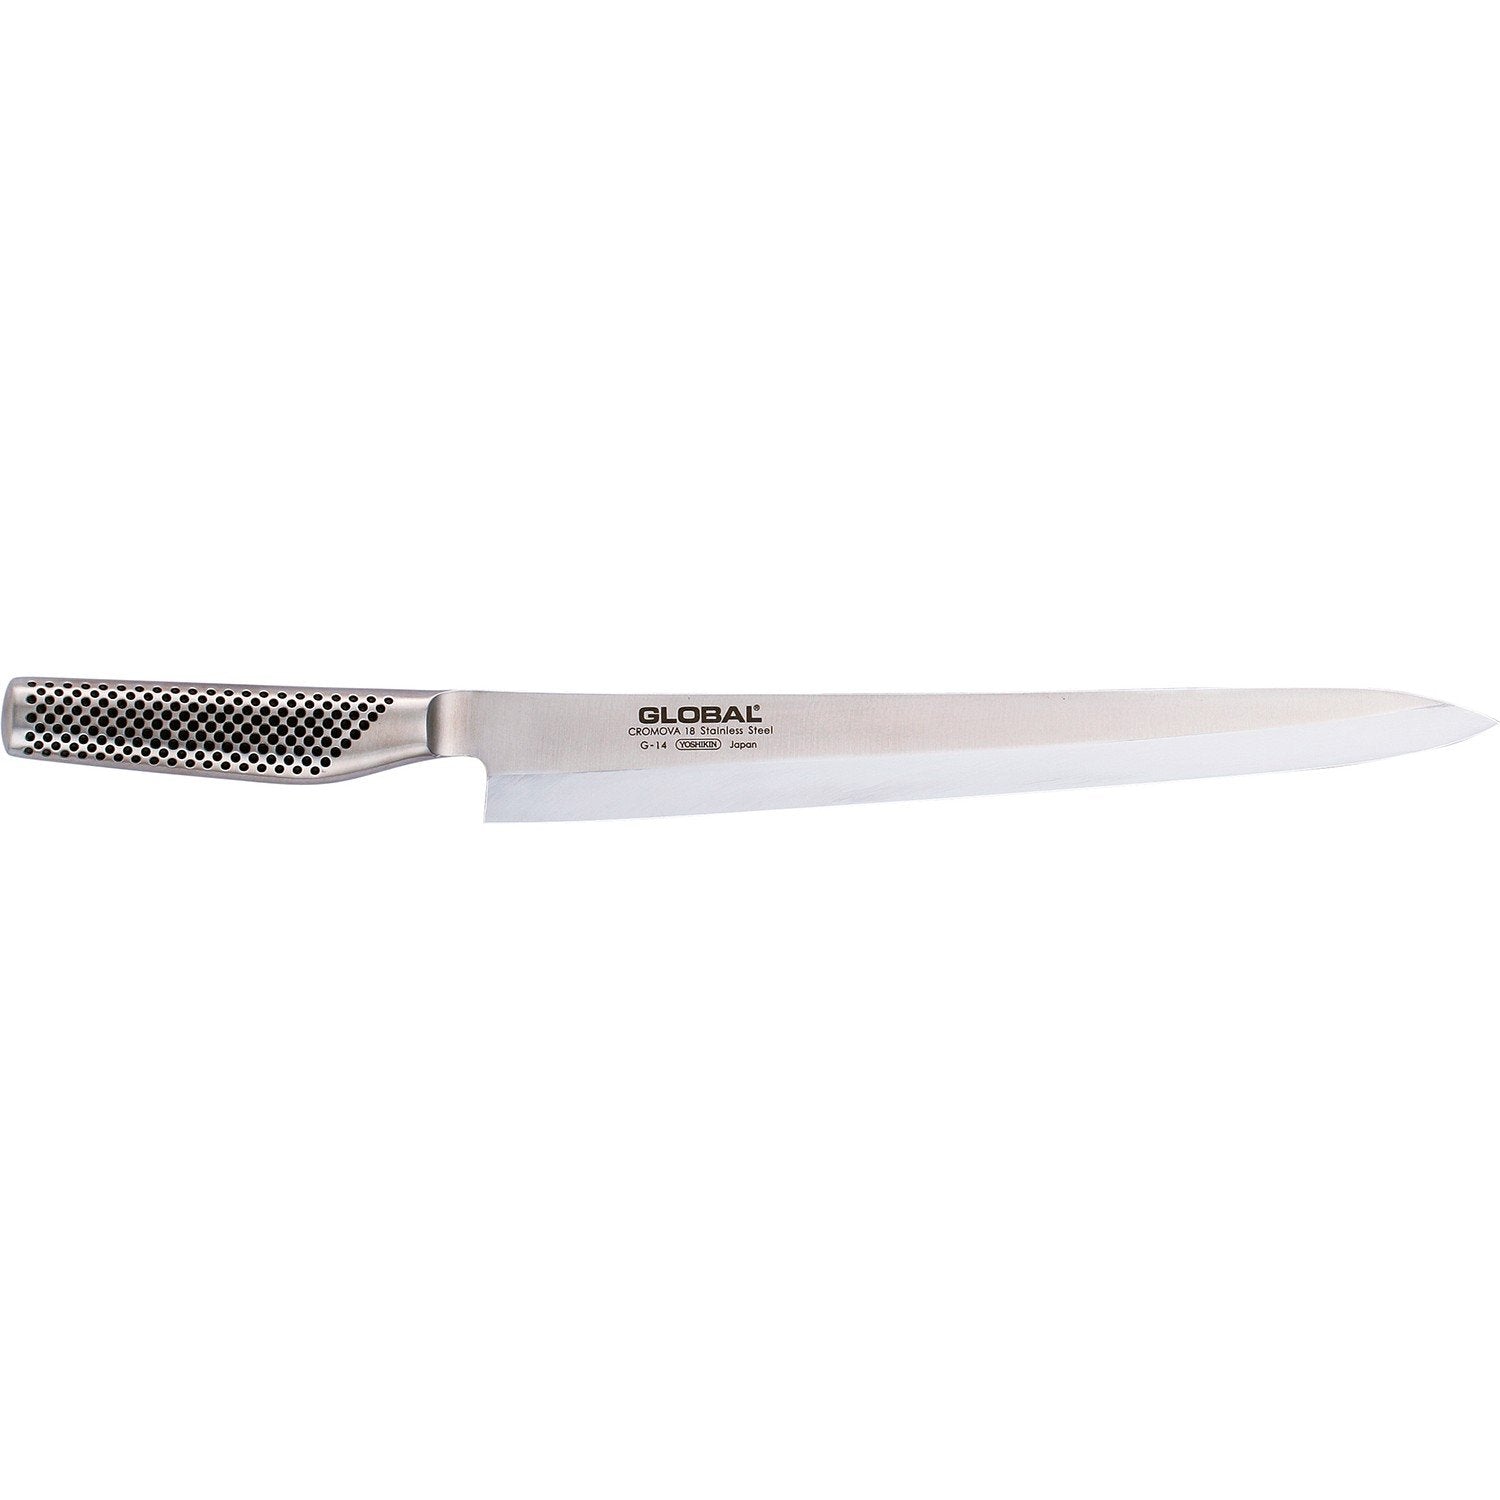 Global G 14 R Couteau de sashimi Yanagi, 30 cm